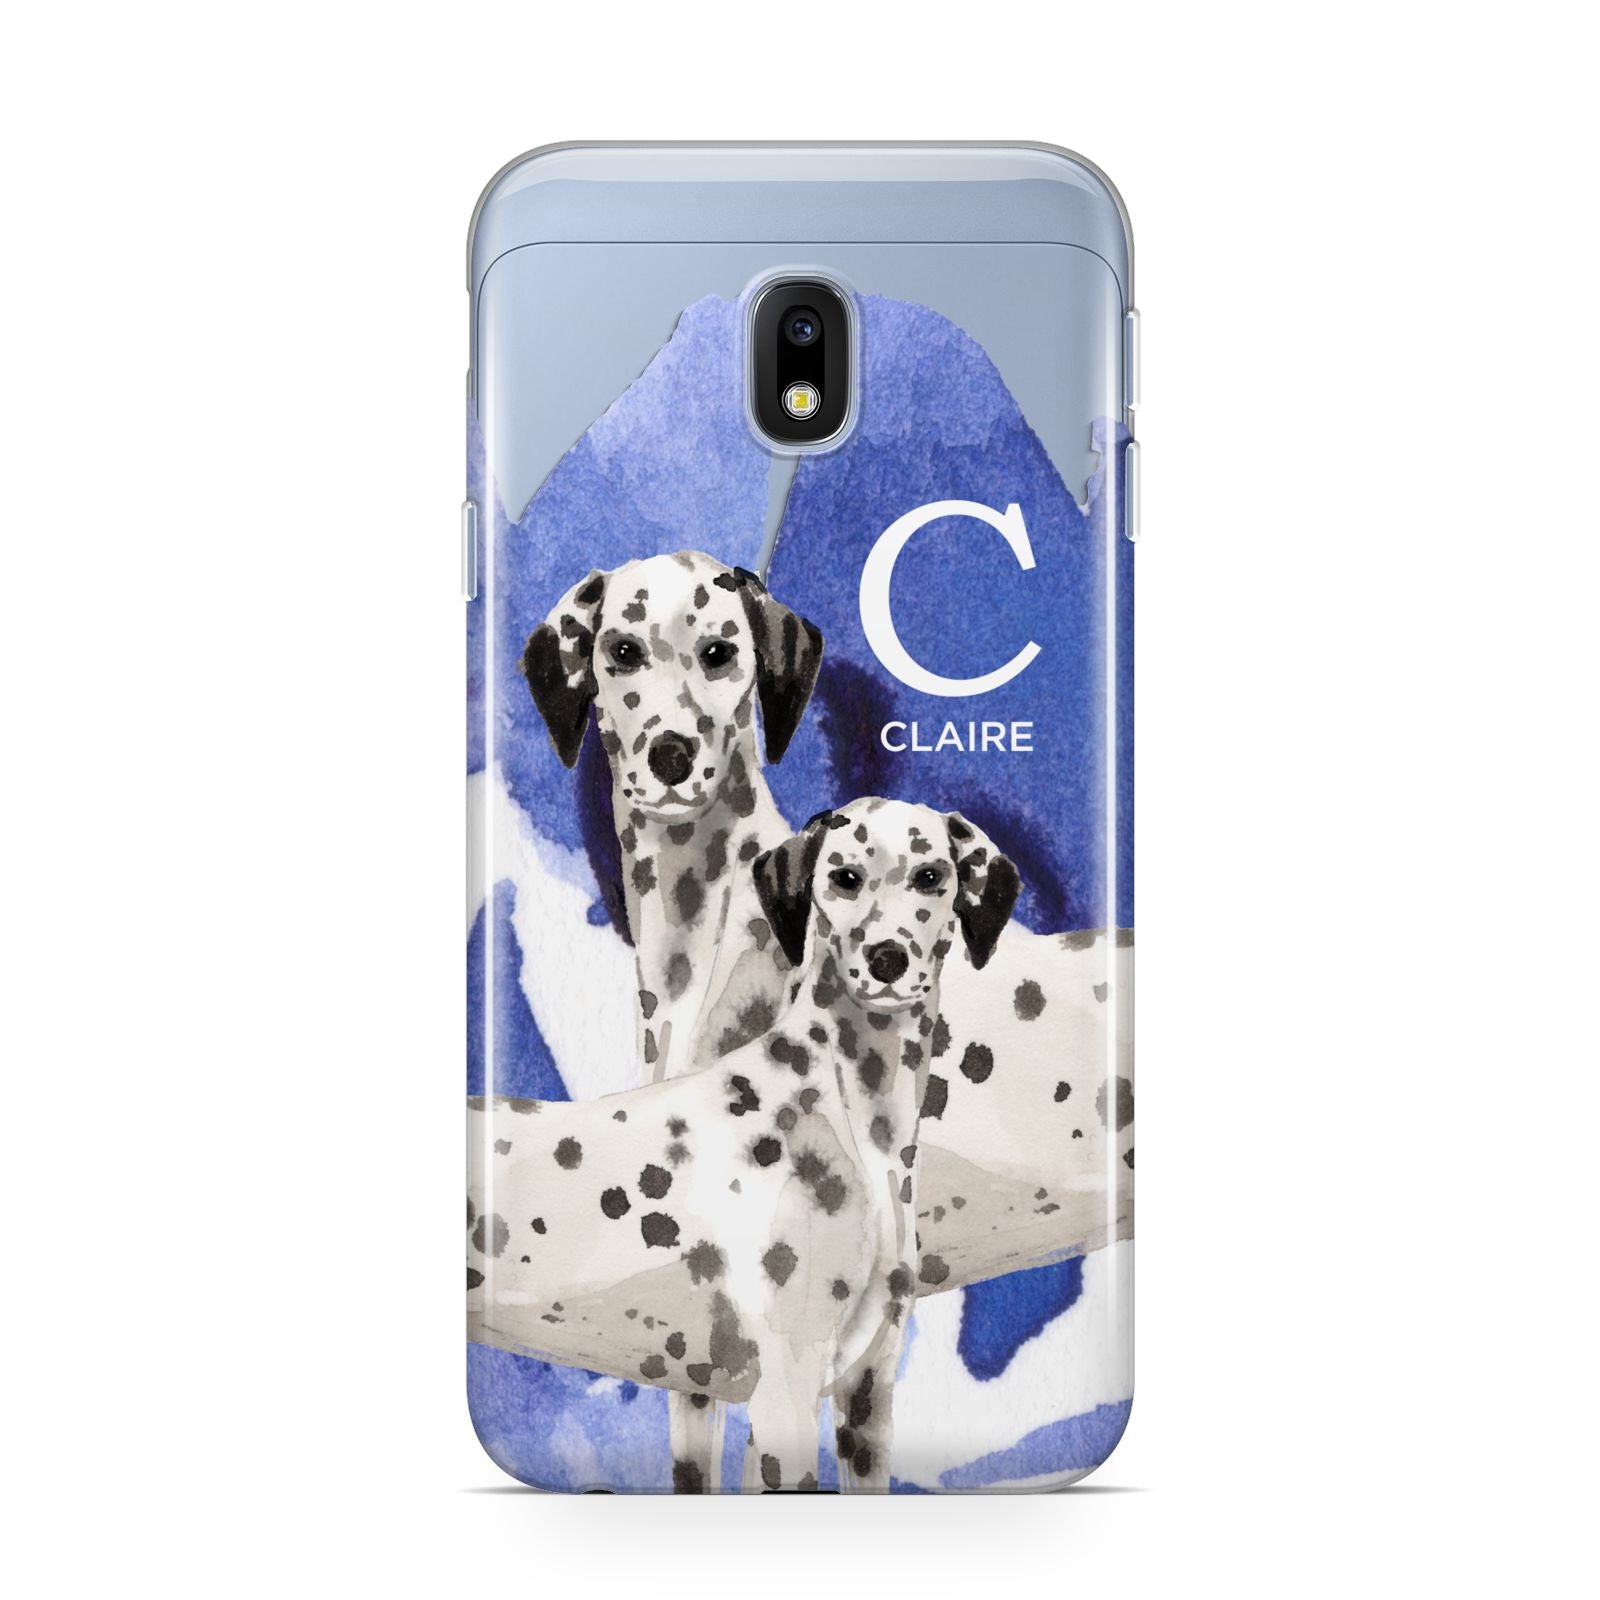 Personalised Dalmatian Samsung Galaxy J3 2017 Case